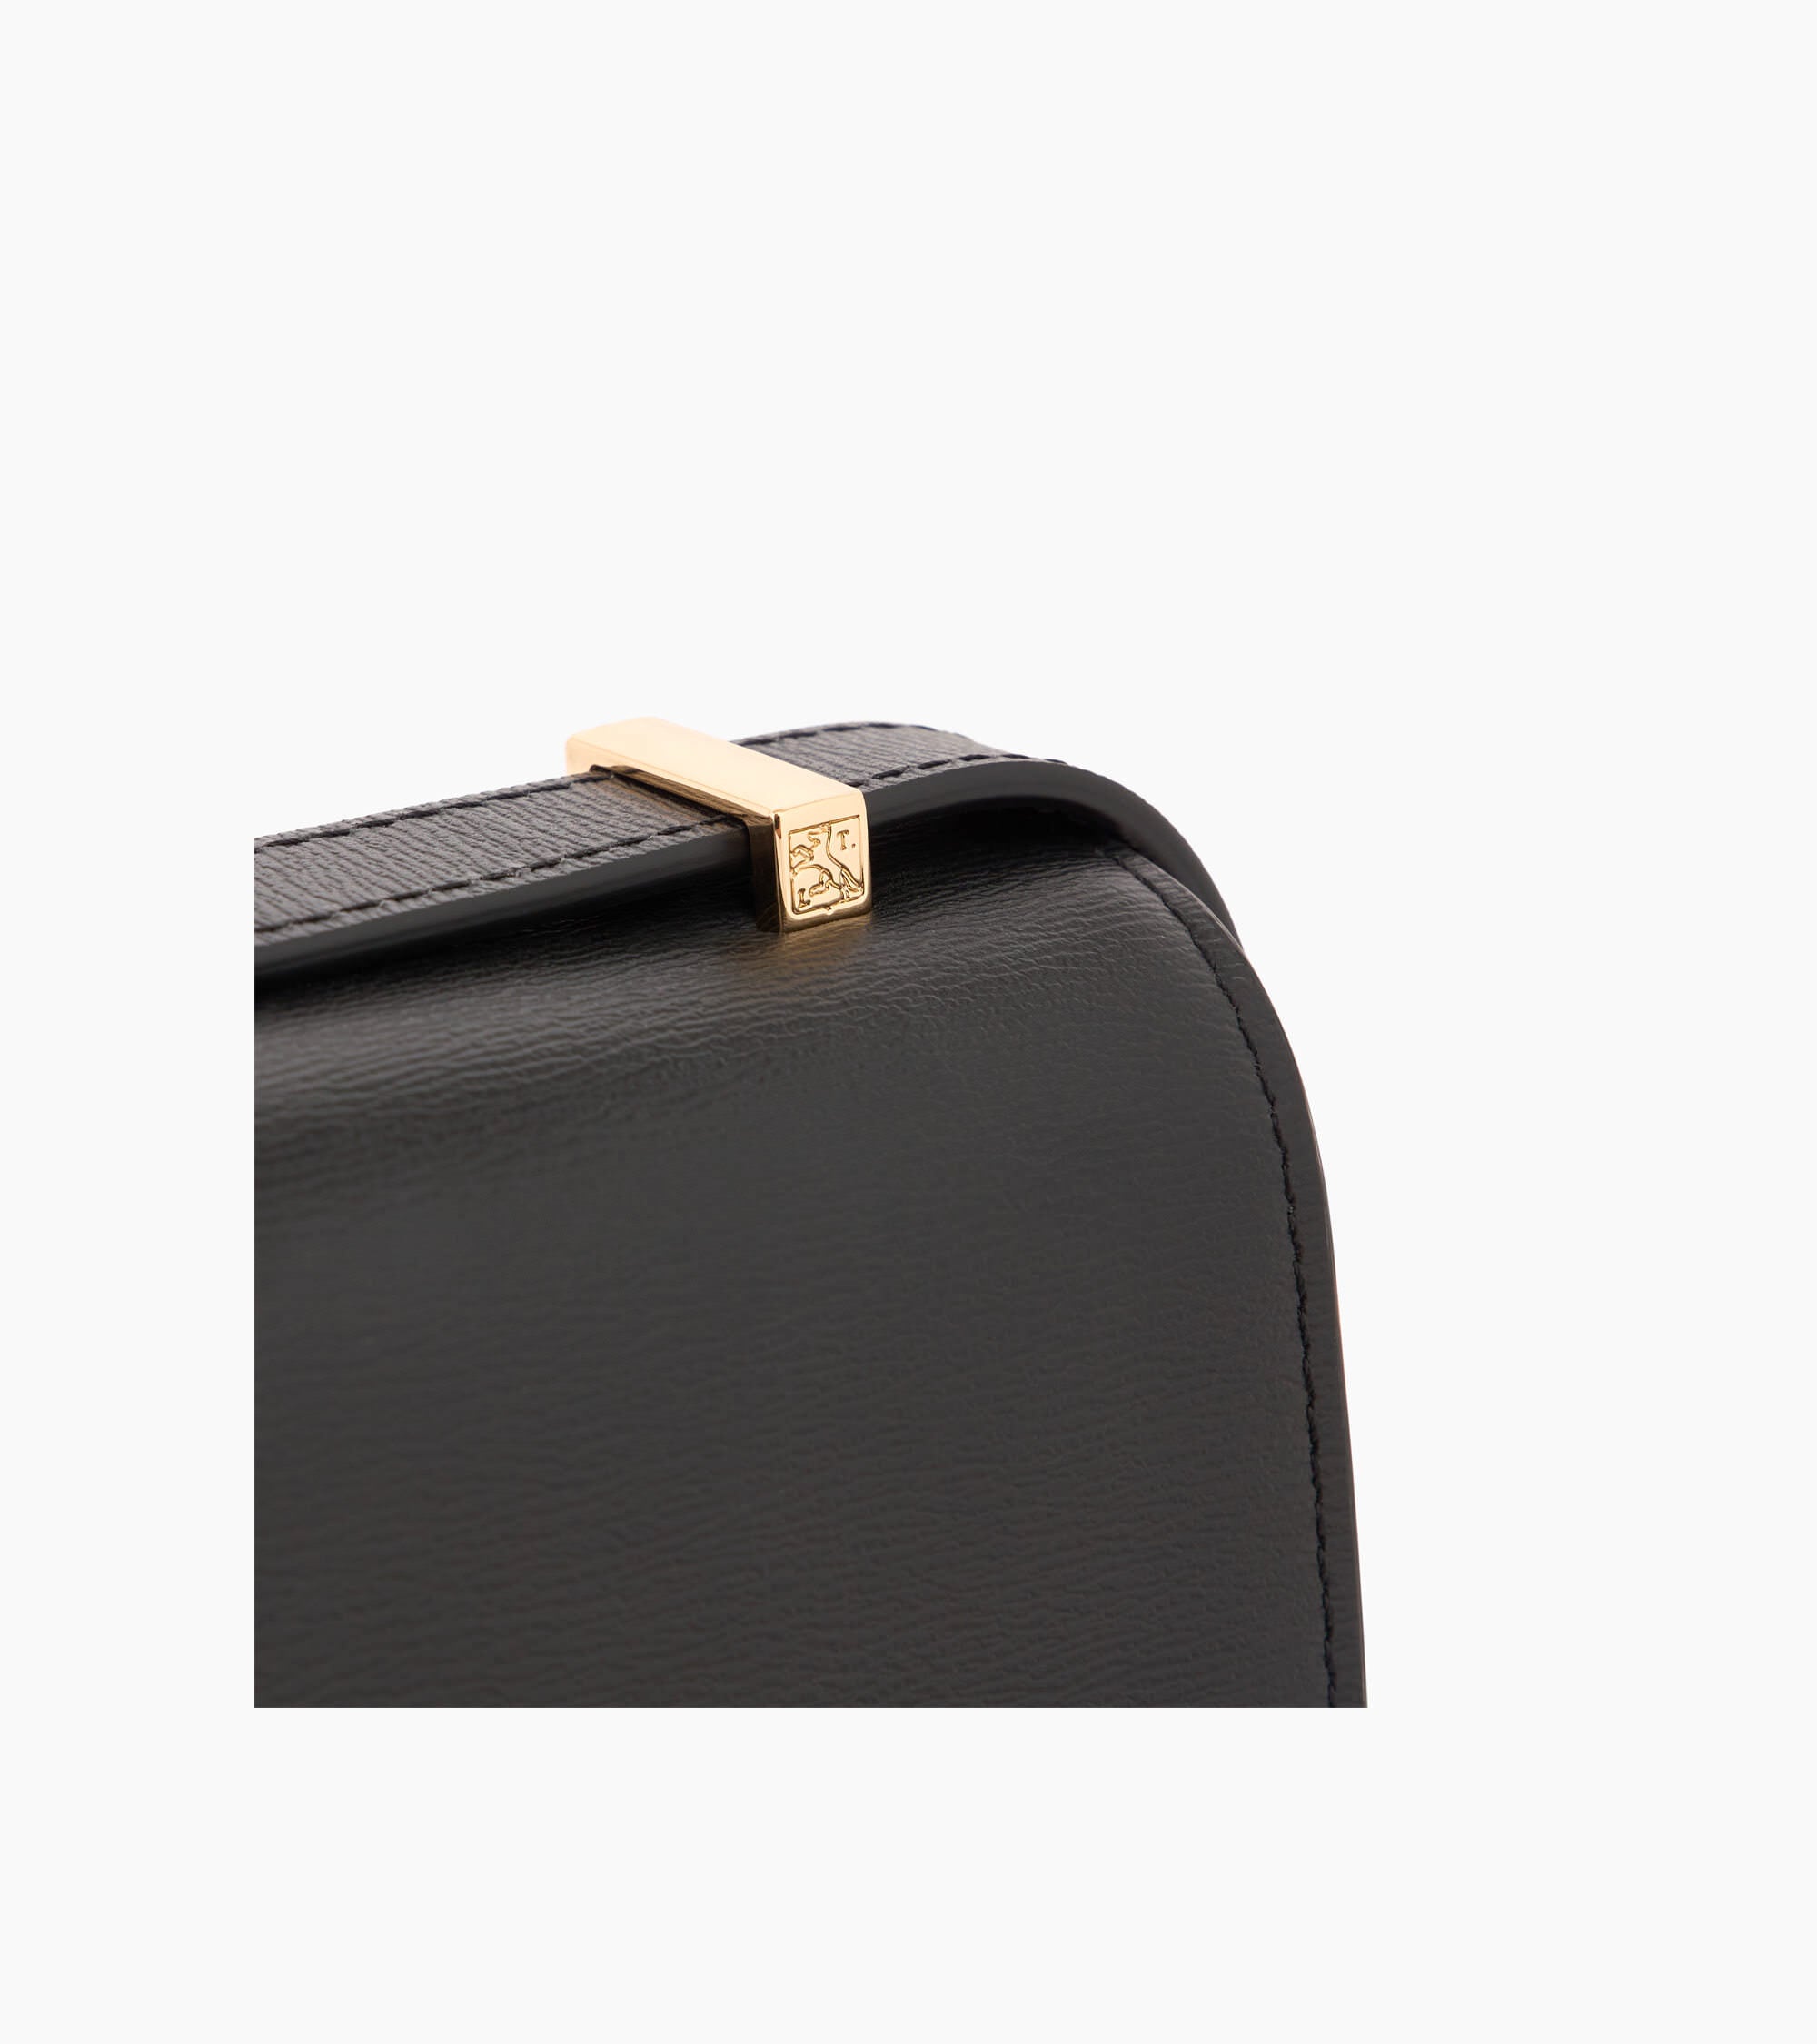 Naya small leather shoulder bag with cork effect